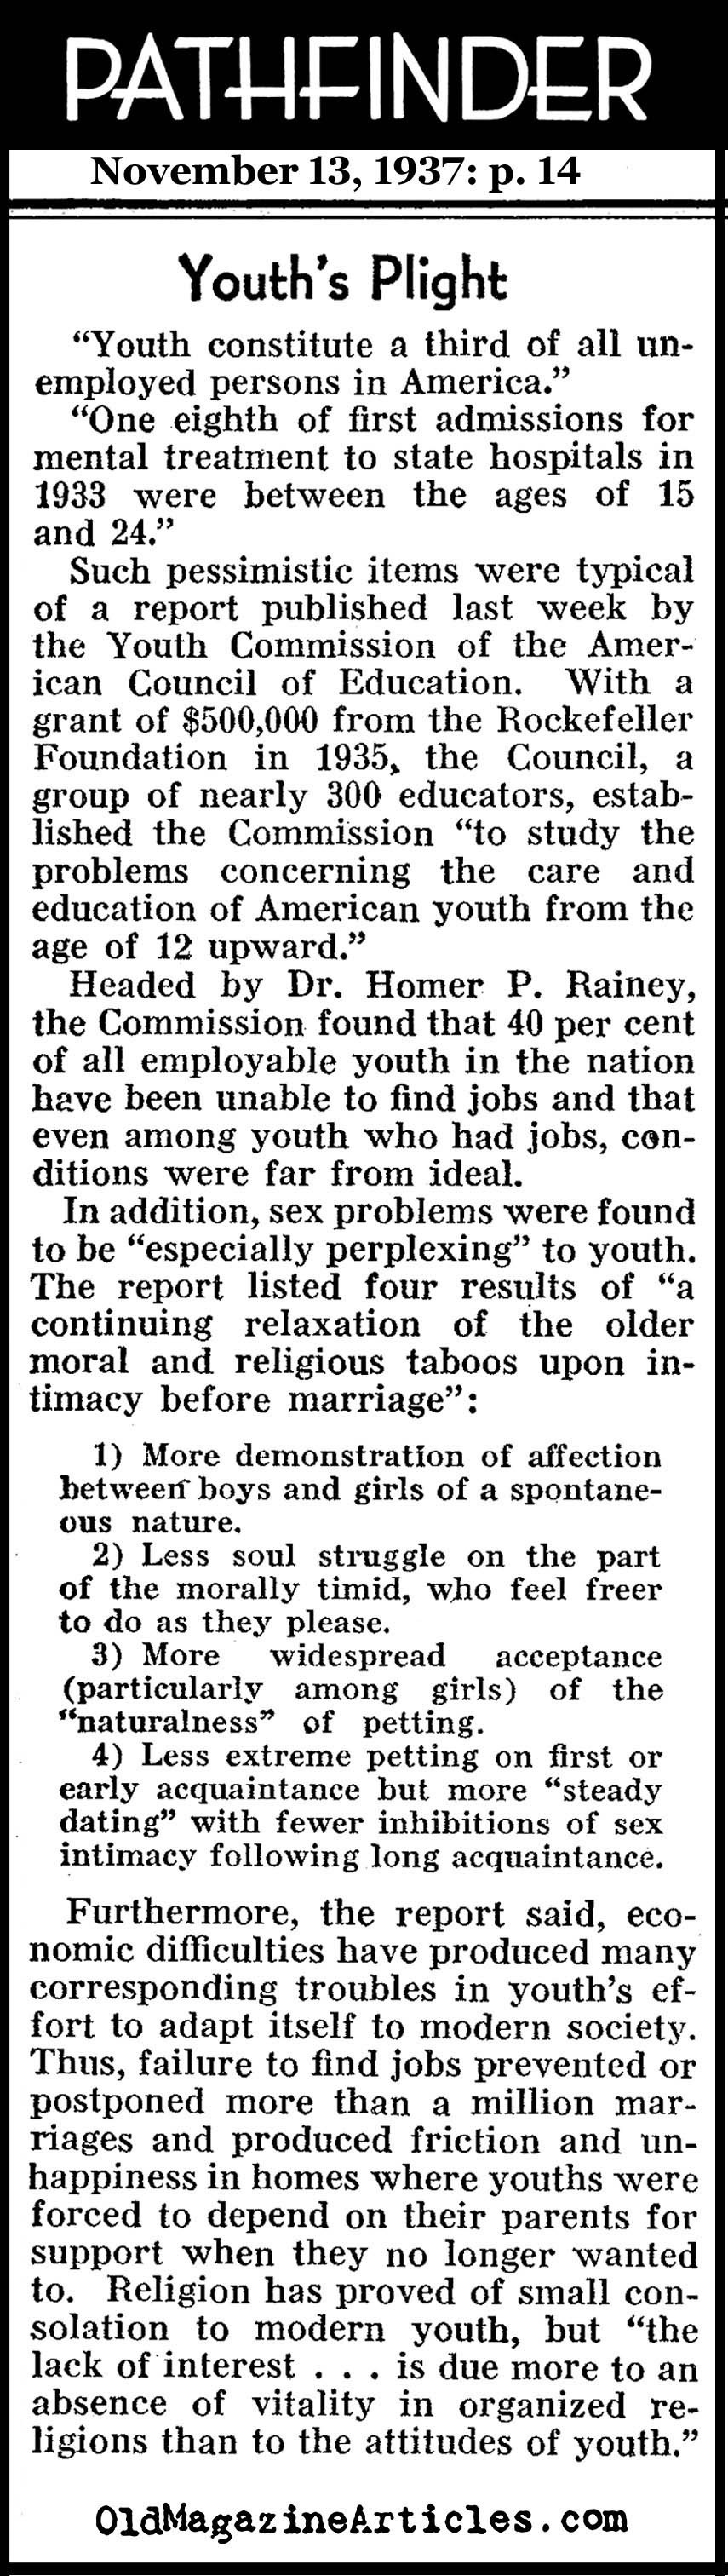 Youth at Risk (Pathfinder Magazine, 1937)